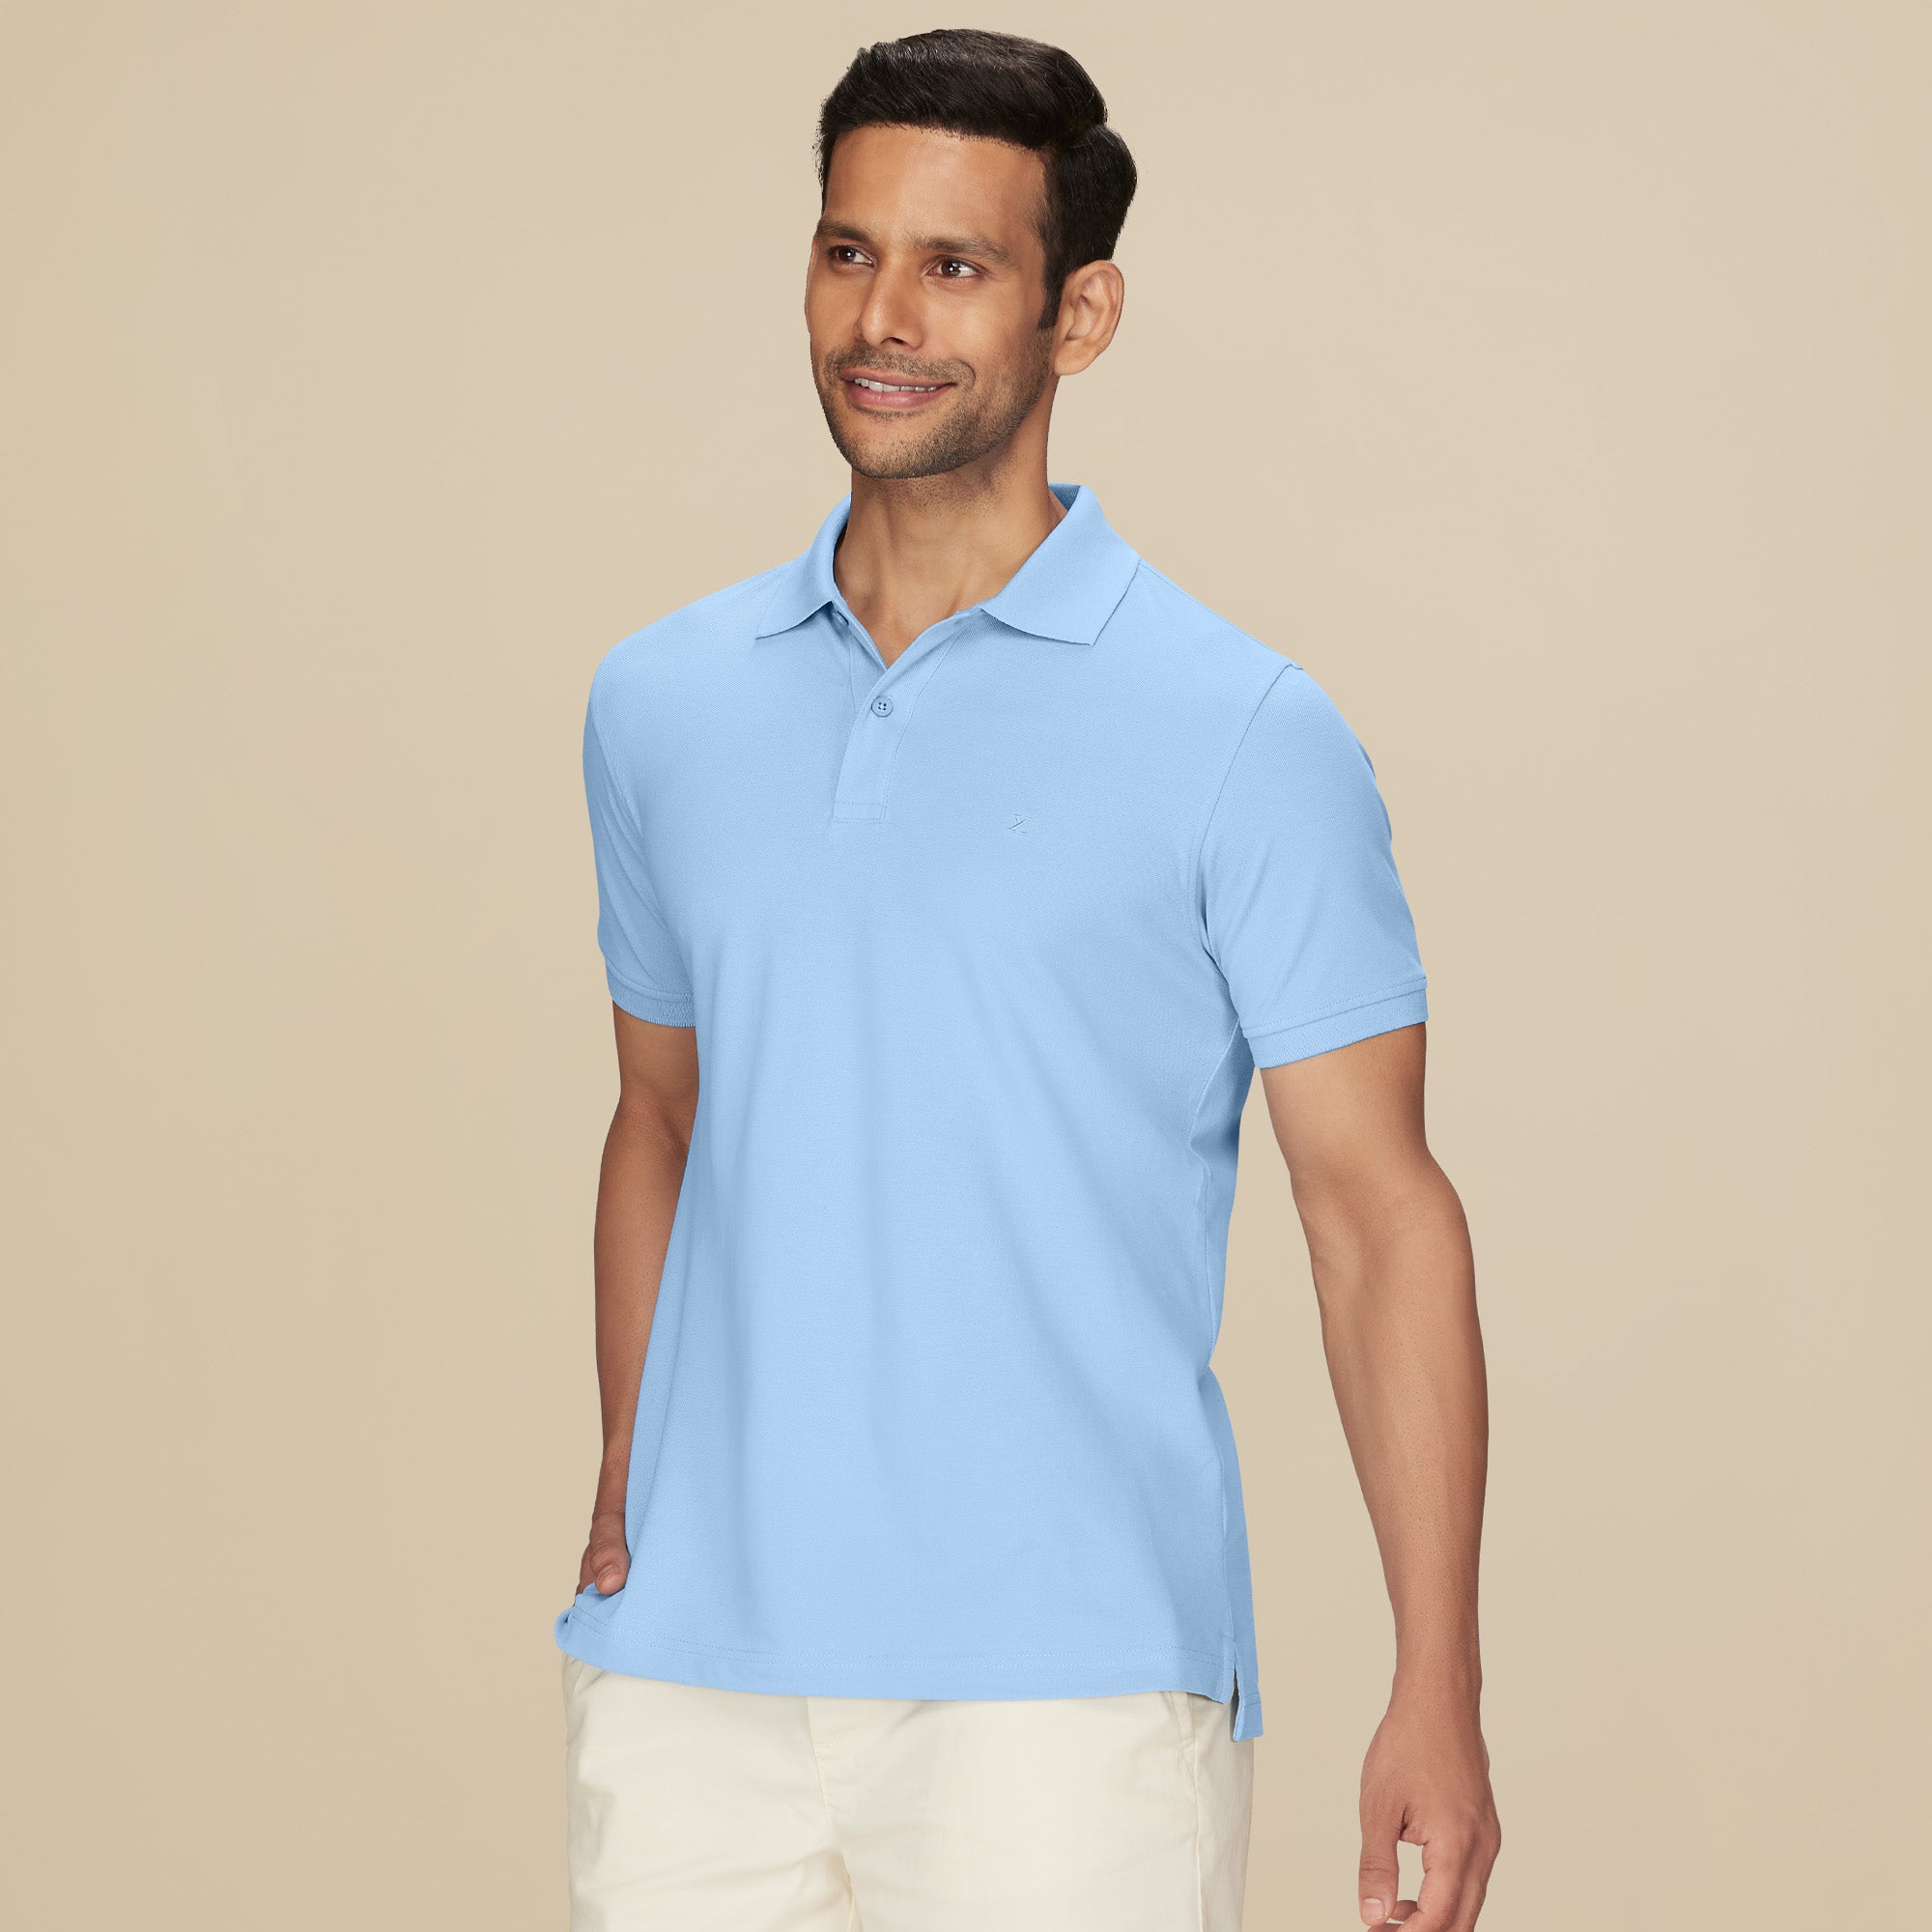 Vantage C Shirts Shapewear Tshirts - Buy Vantage C Shirts Shapewear Tshirts  online in India